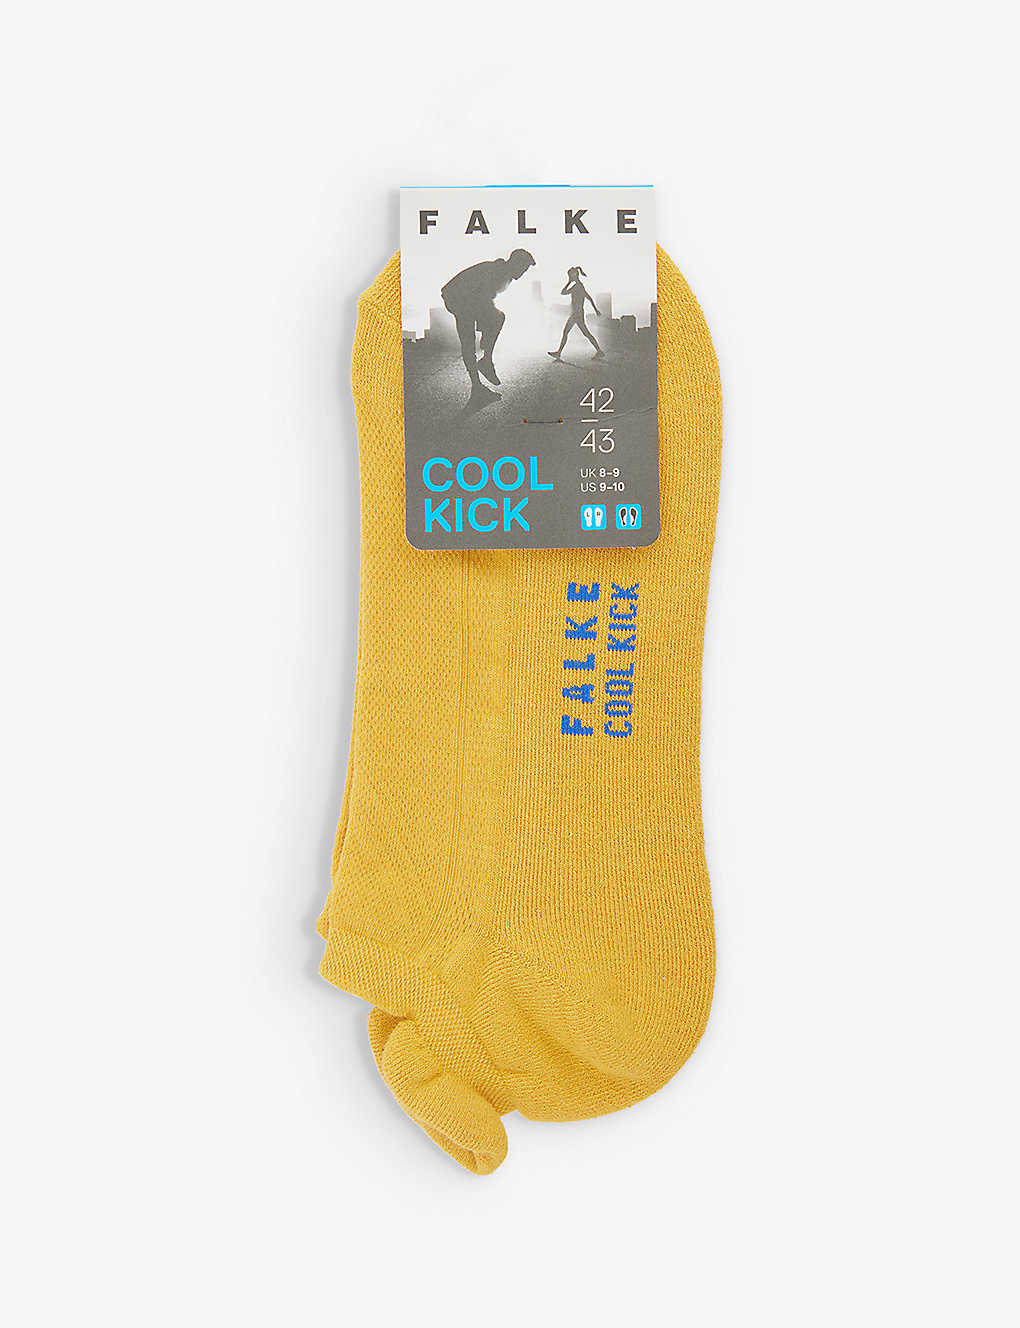 Falke Mens Hot Ray Cool Kick Low-cut Cushioned-sole Woven Socks